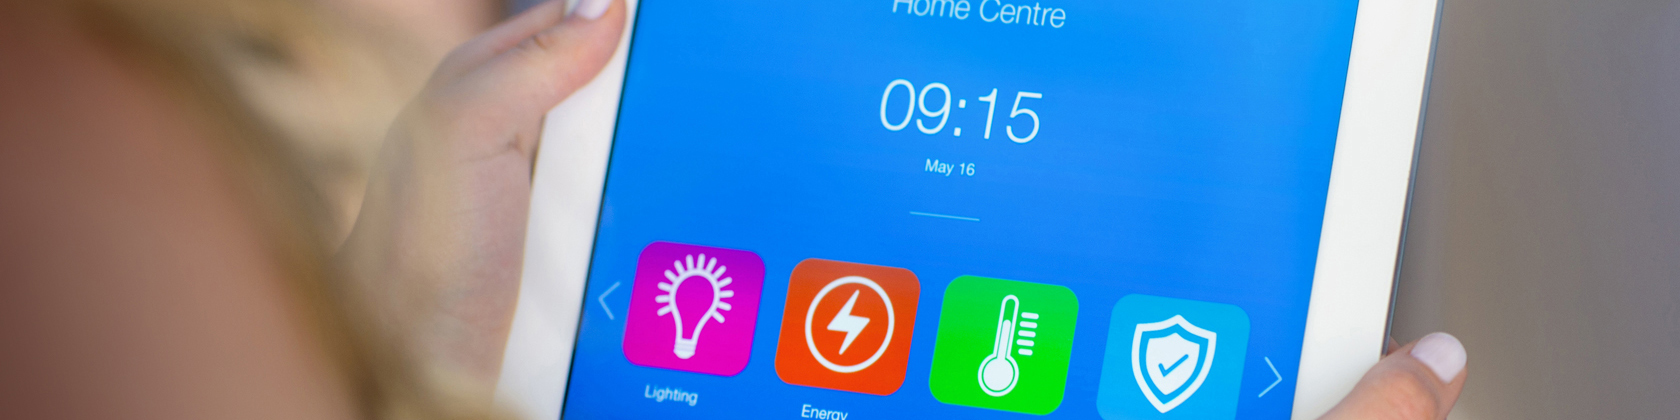 Digital home control apps